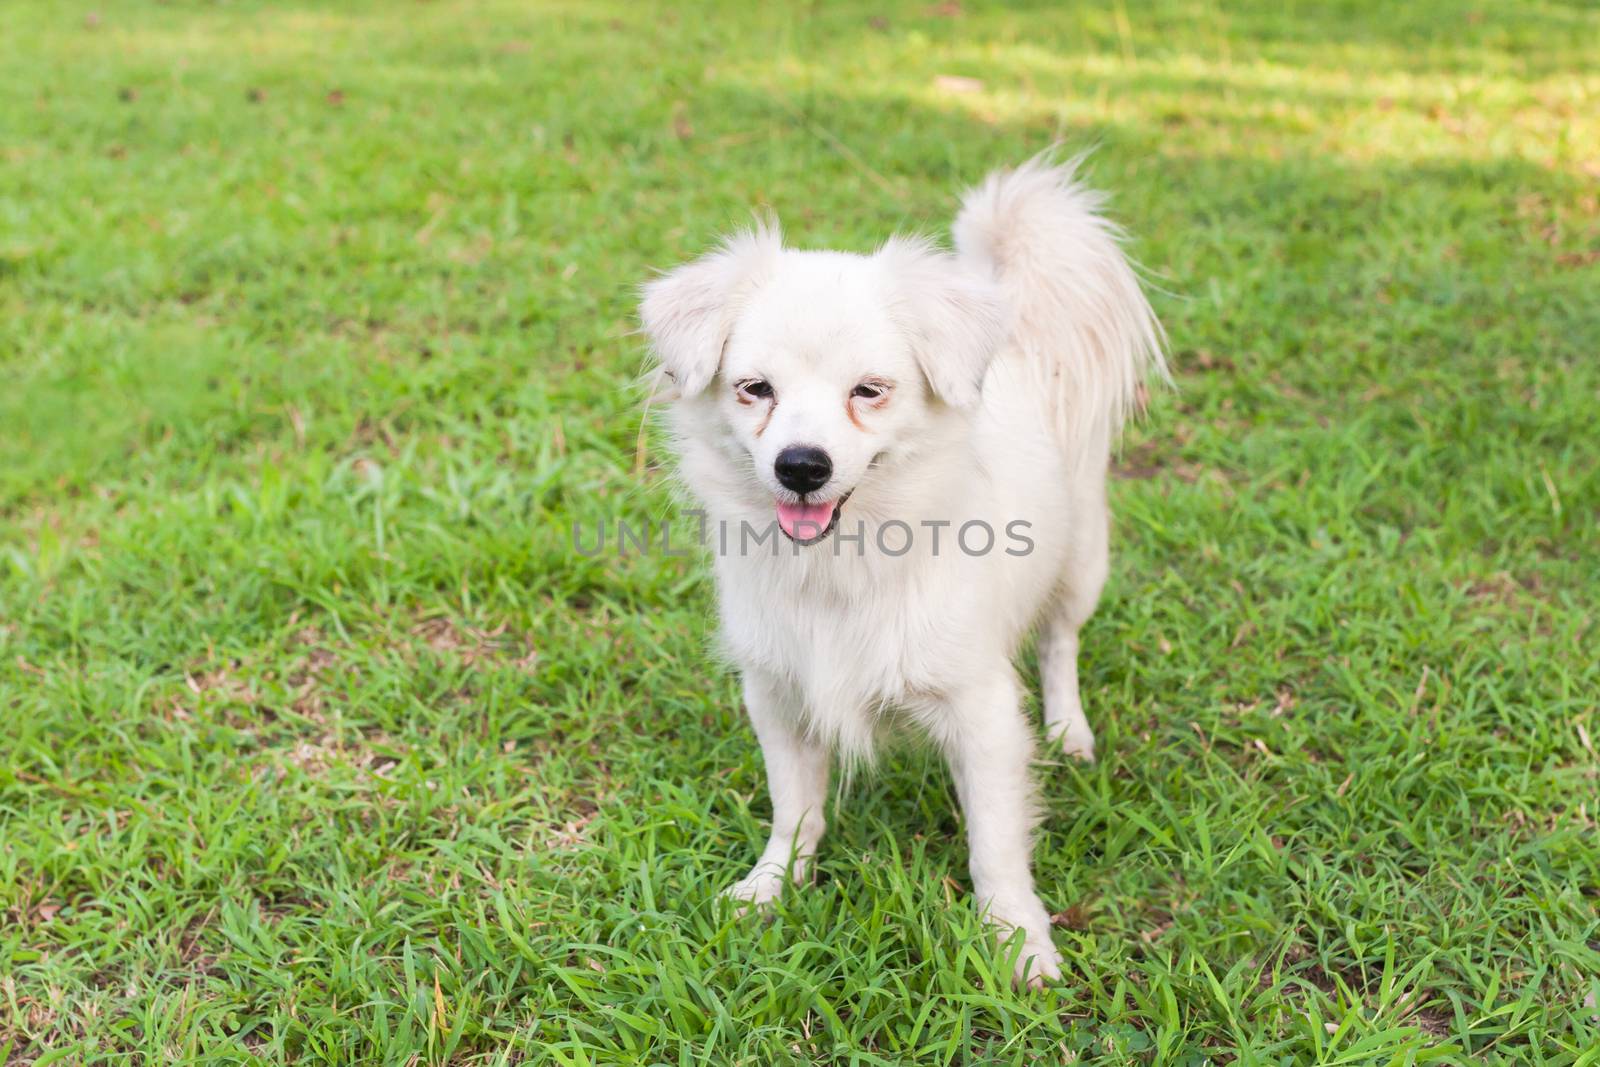 Cute maltese dog standing in grass .